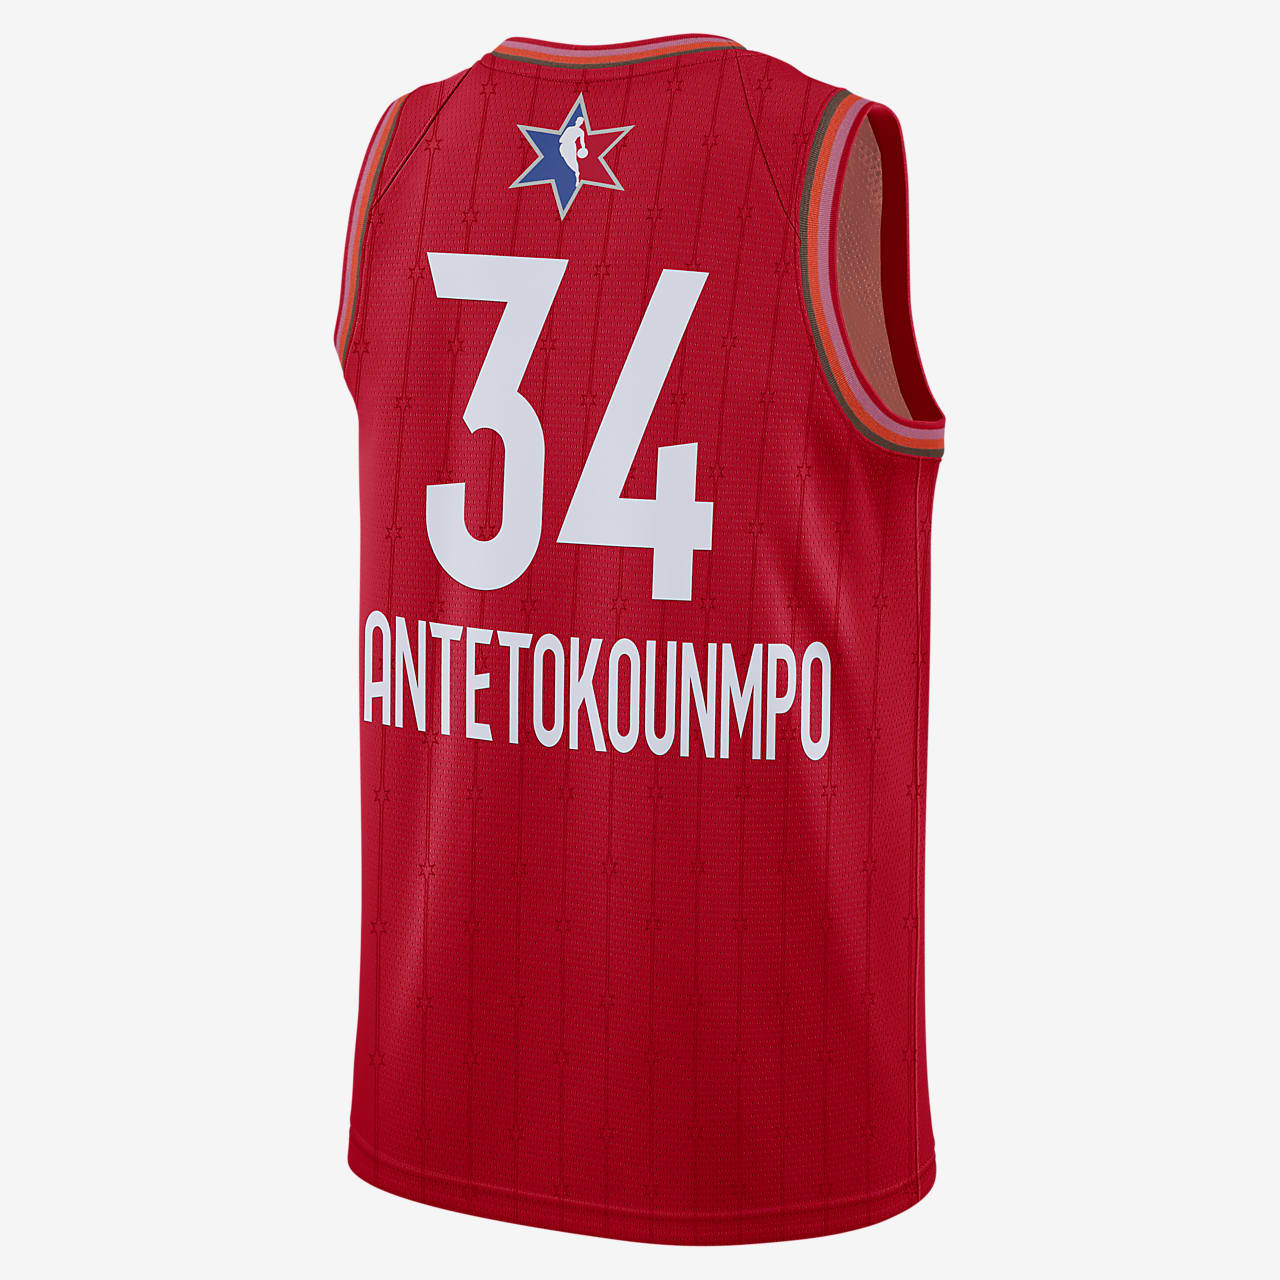 Nike Jordan Giannis Antetokounmpo 2020 All-Star Red Swingman Jersey Size M  (44)